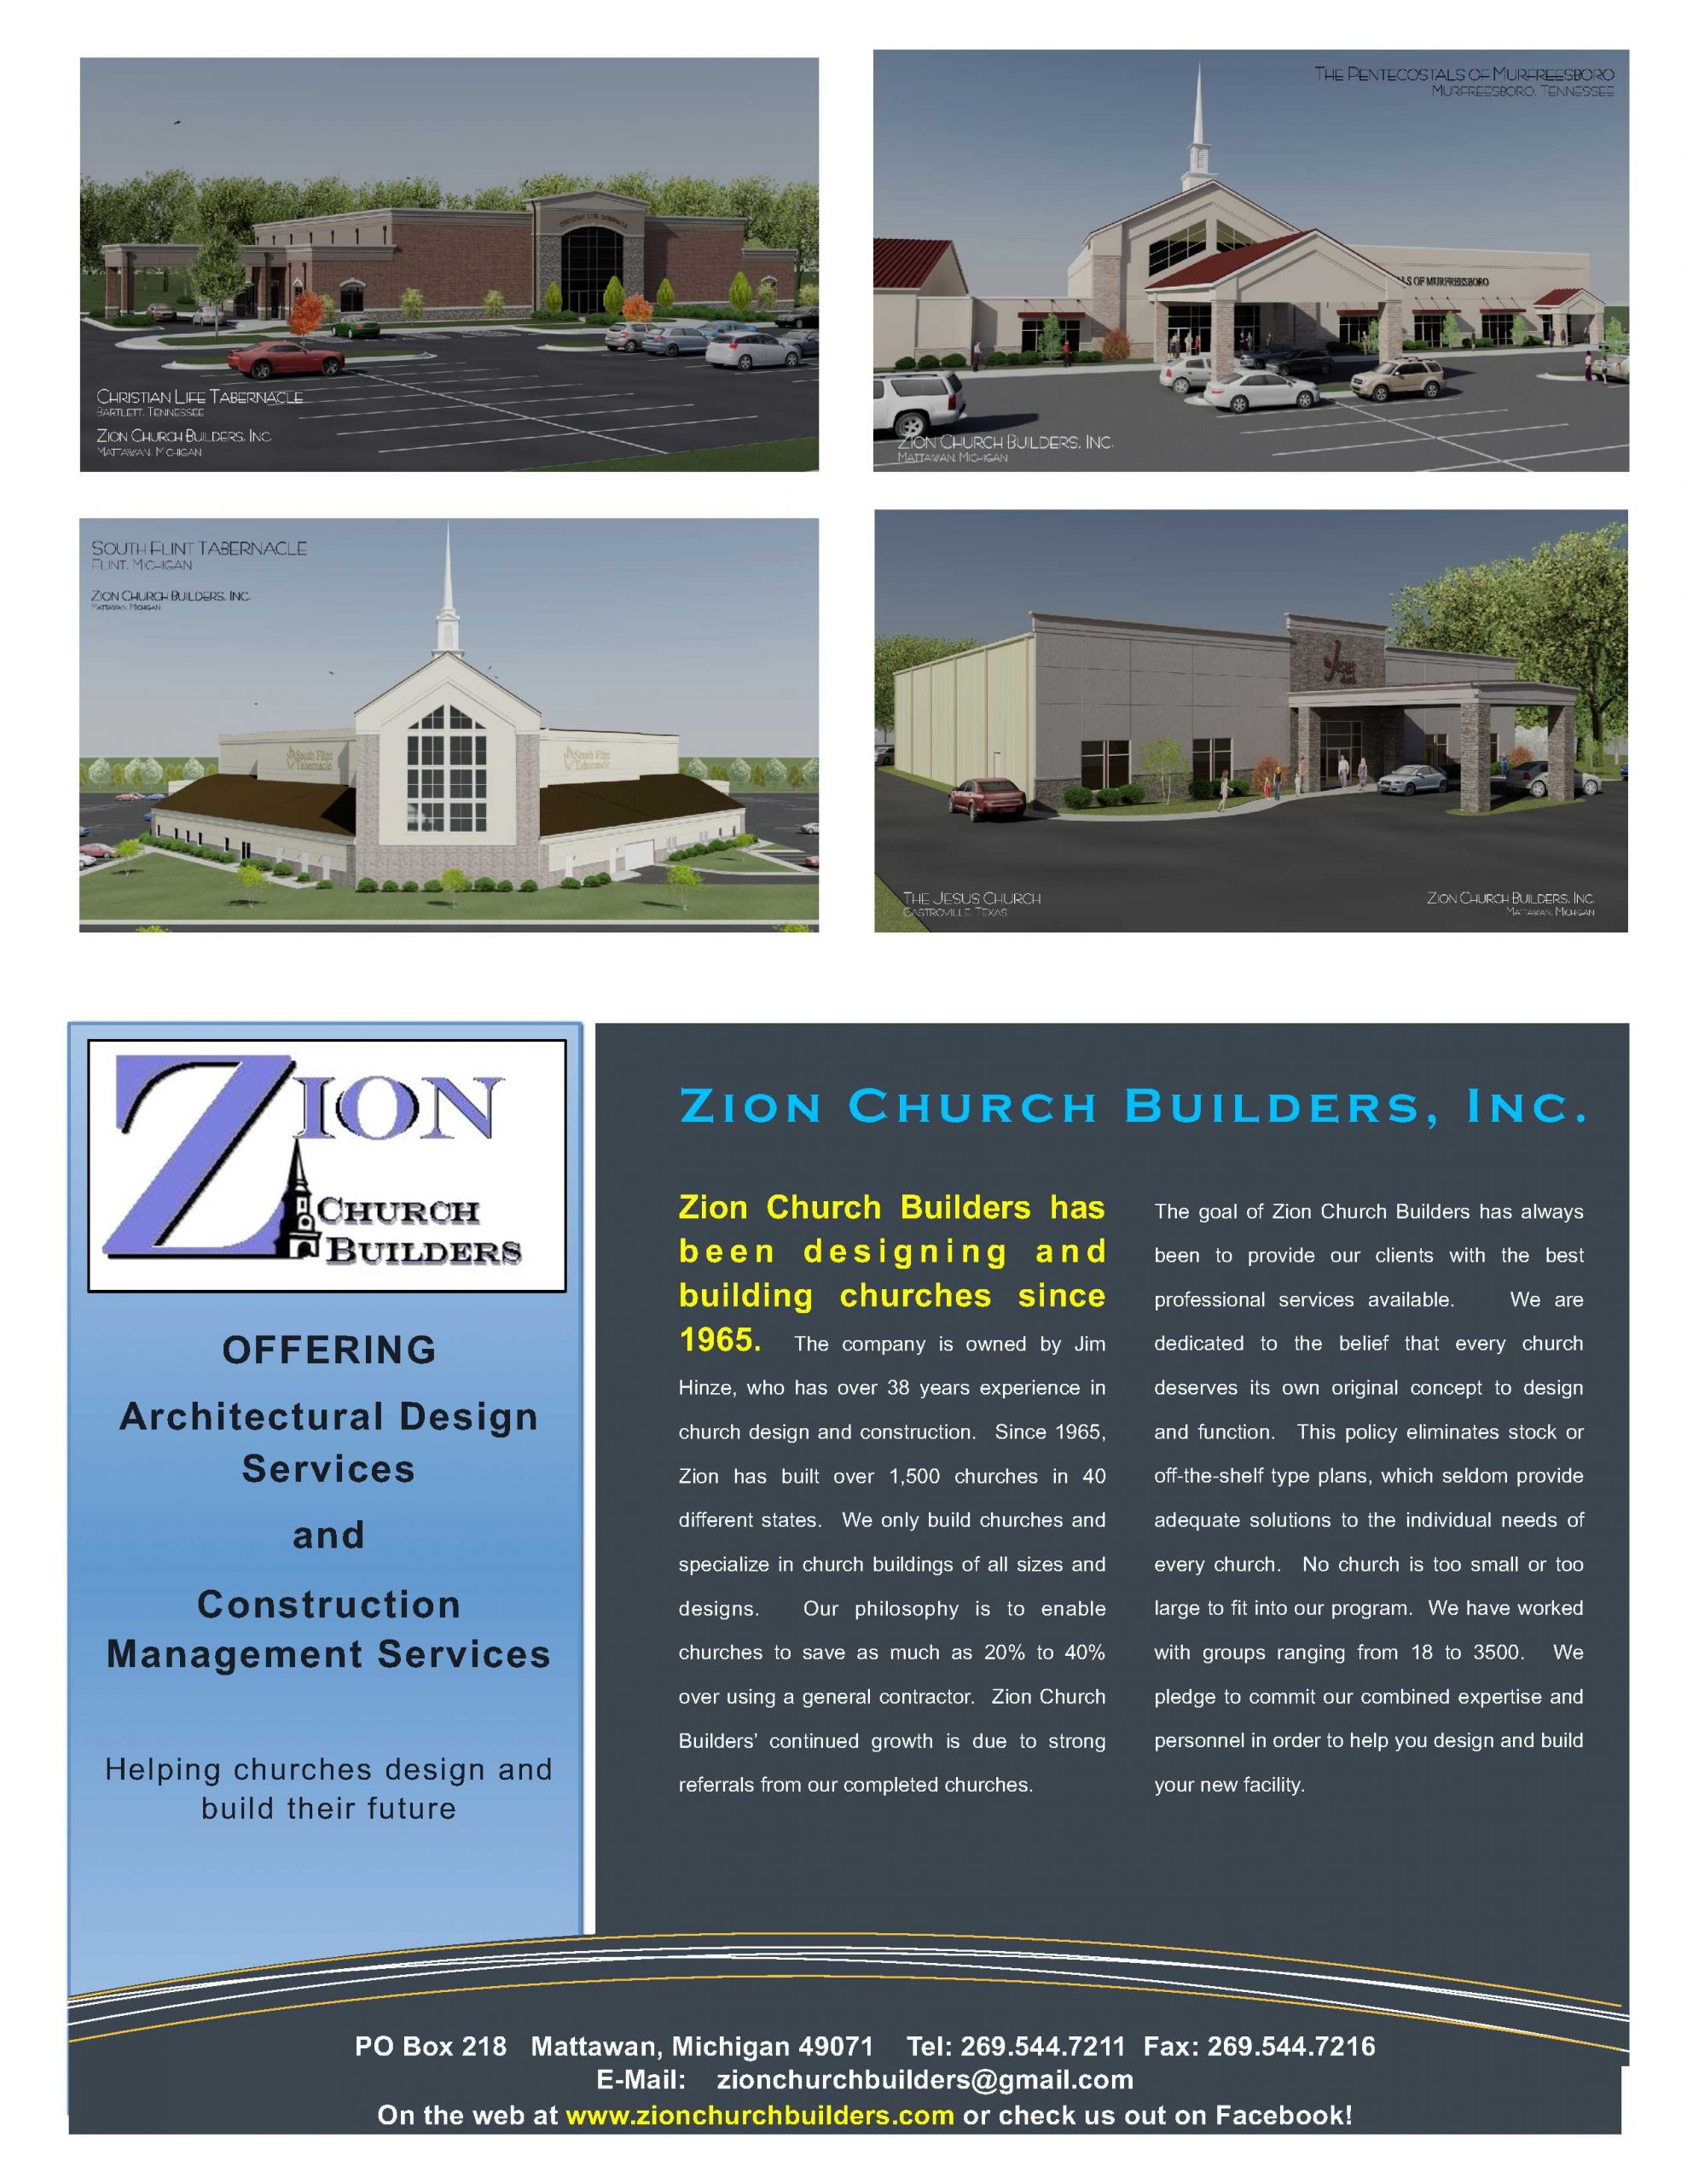 Zion Church Builders